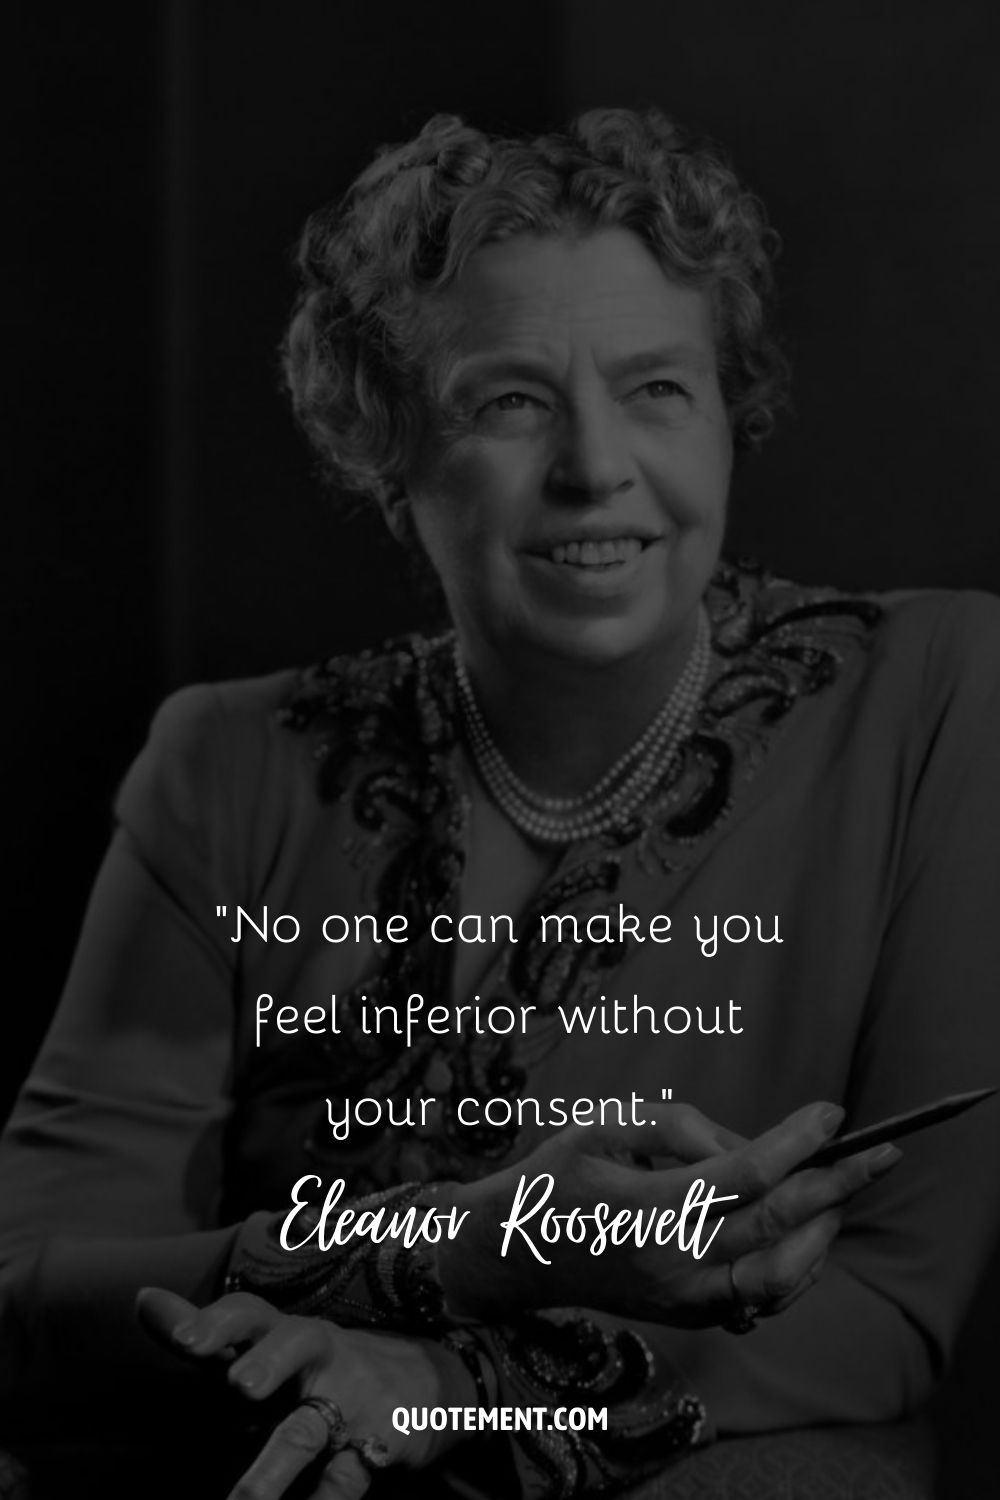 Image of Eleanor Roosevelt representing the best Eleanor Roosevelt quote.
